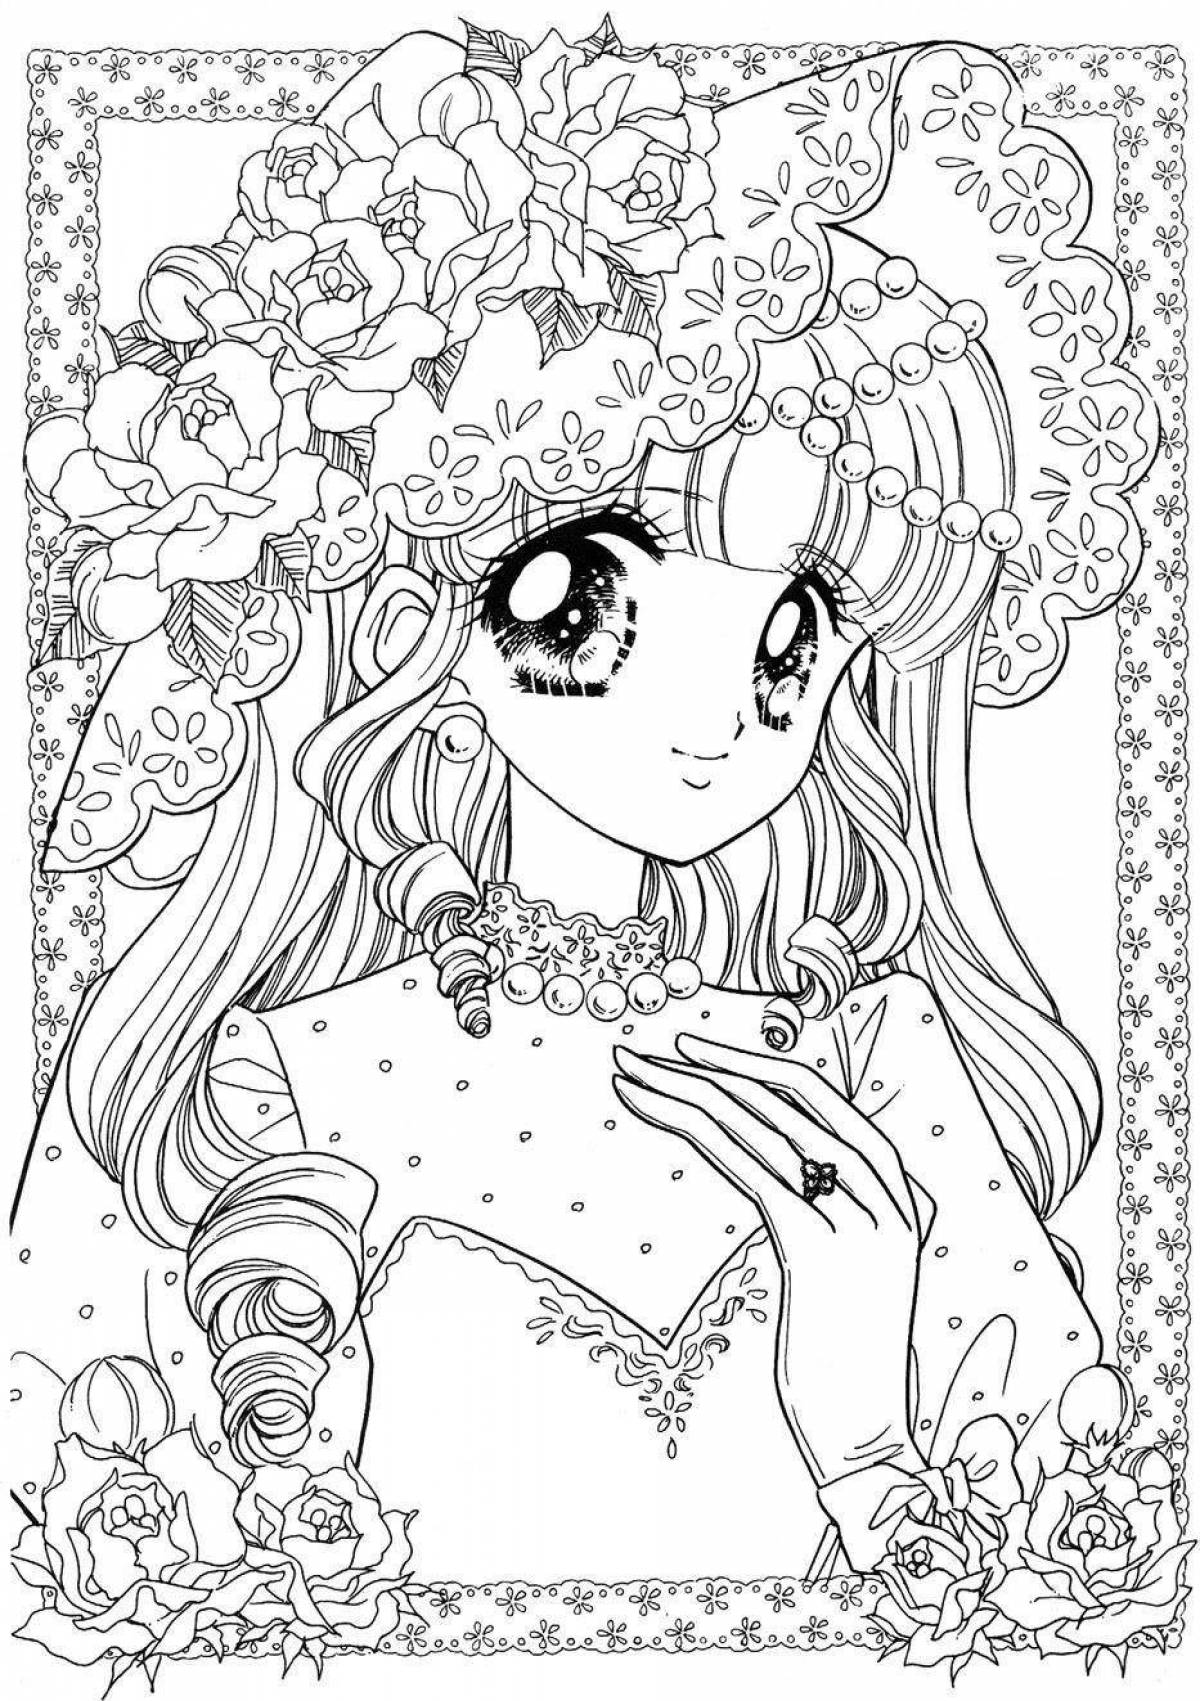 Exquisite princess coloring book